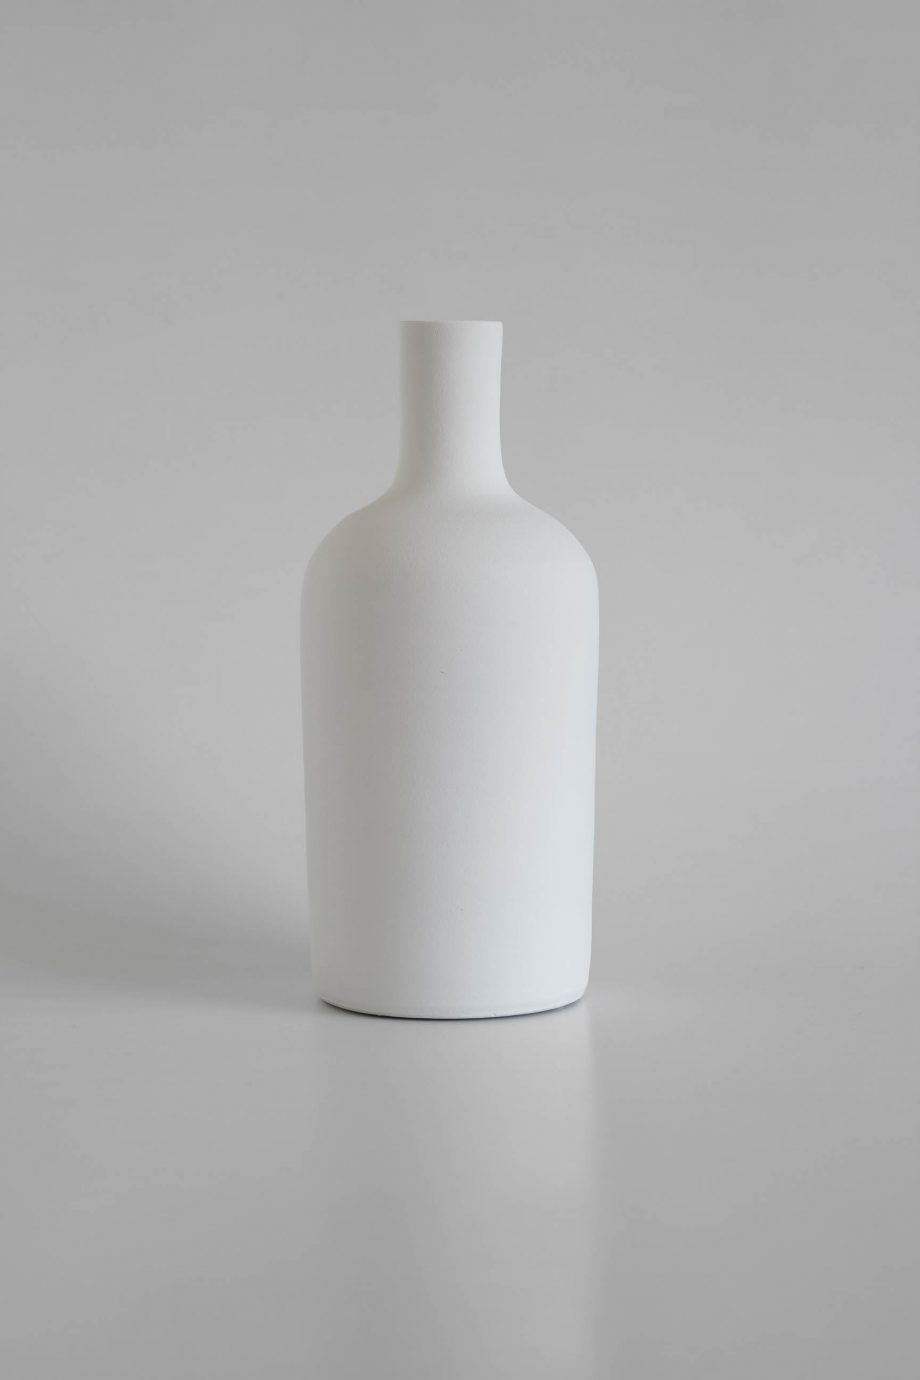 Tall white decorative vase from the Portuguese handicraft brand o cactuu.